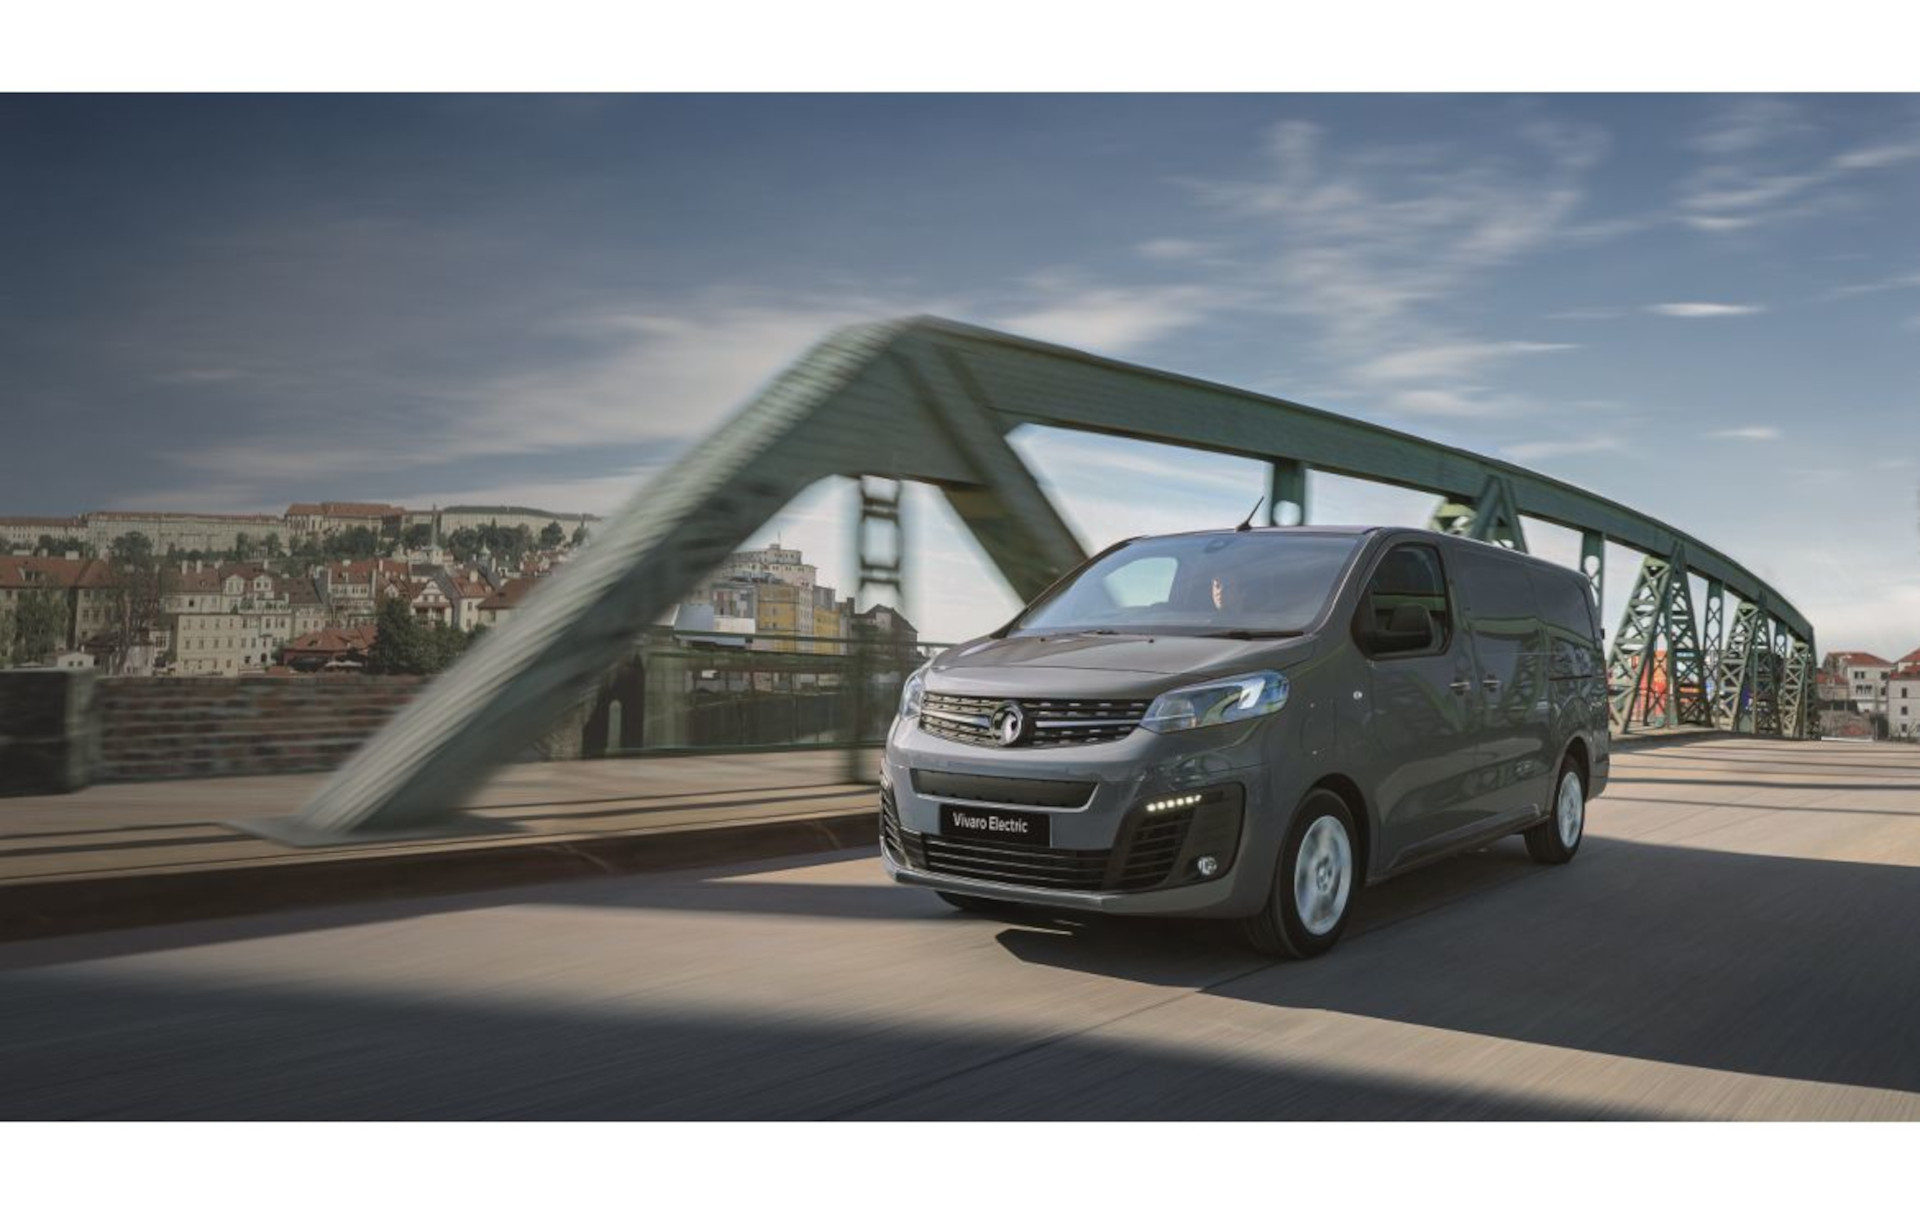 UK’s best-selling electric van manufacturer – Vauxhall